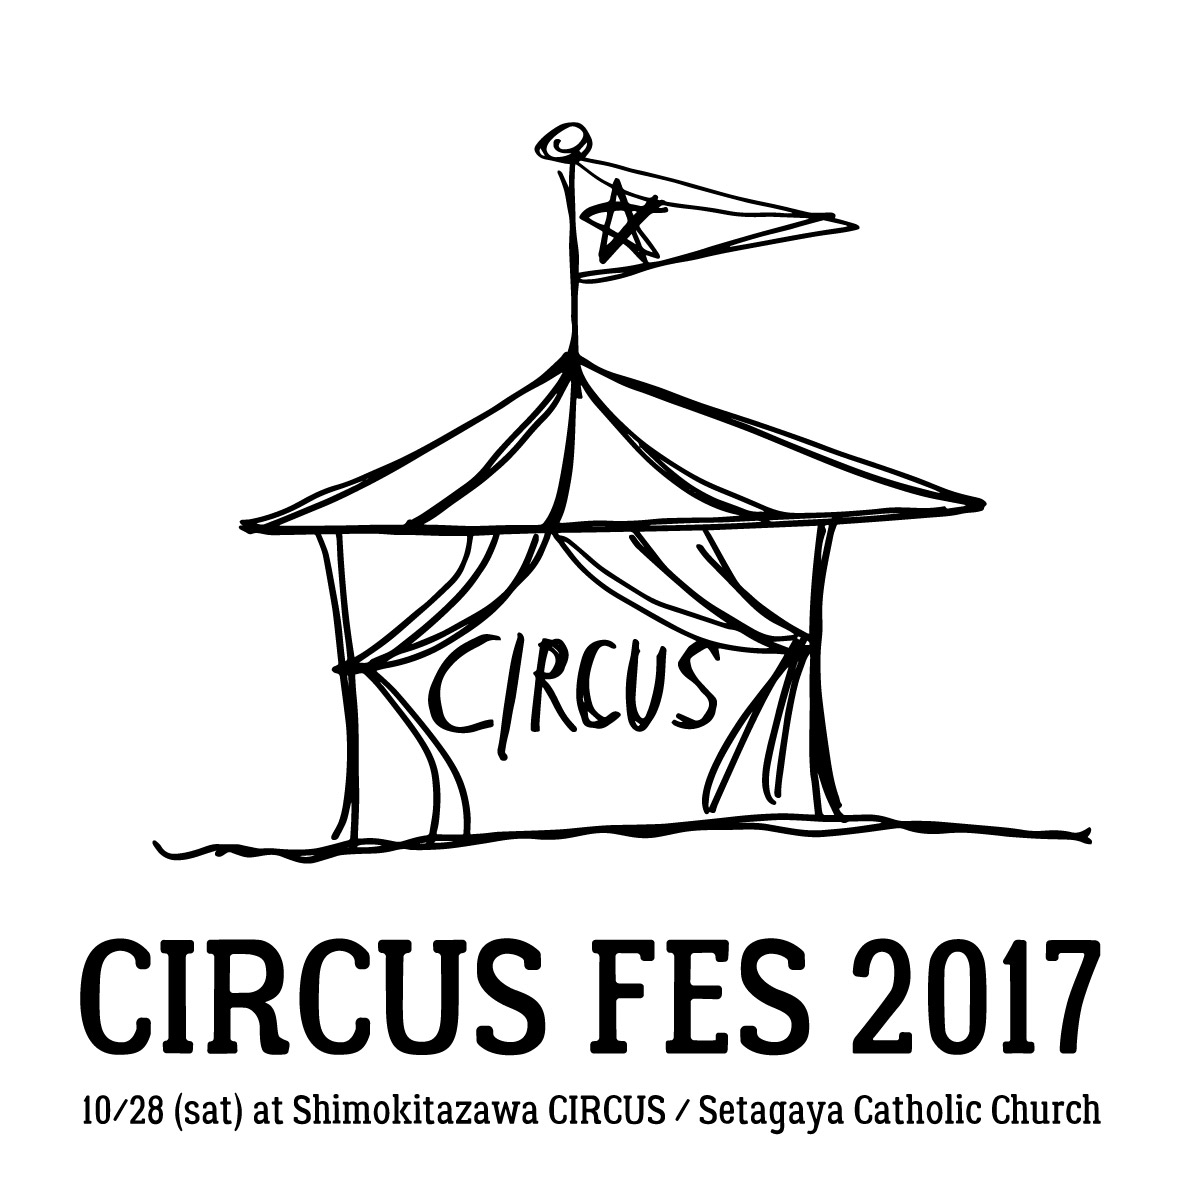 Nozomi Nobody&根津まなみ主催の教会フェス『下北沢CIRCUS FES 2017』10/28に開催決定　出演者第一弾にTAMTAM、1983、成山剛など8組